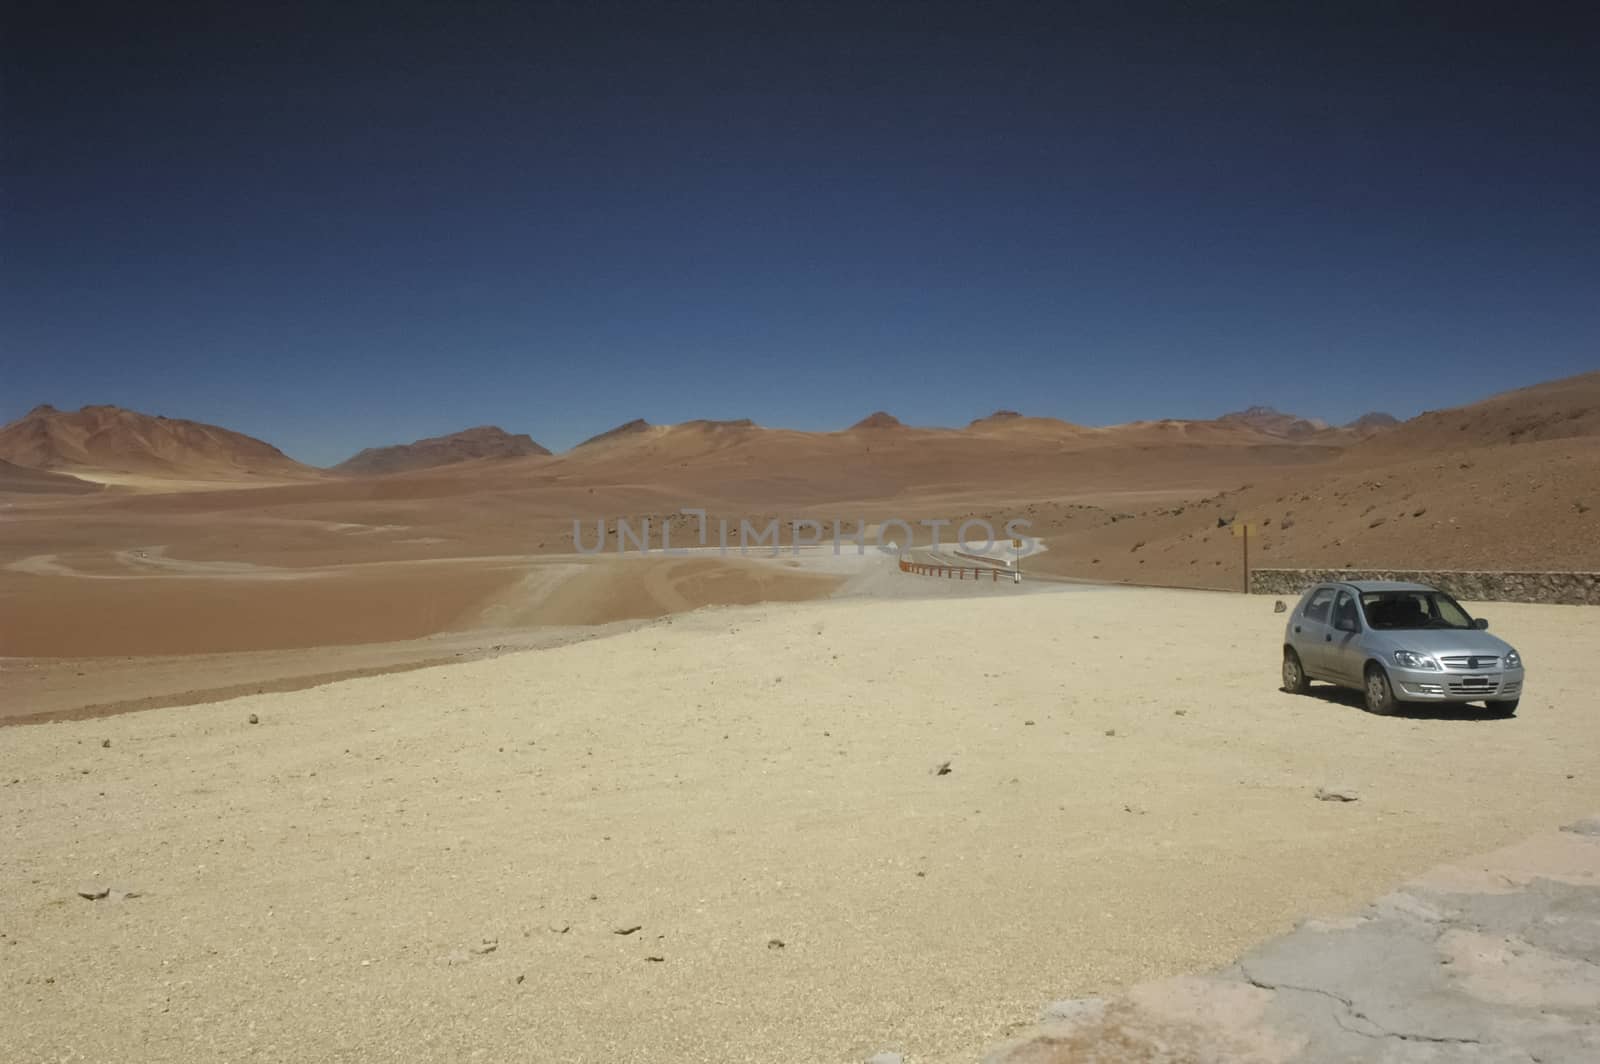 Martian terrain in the desert of Atacama